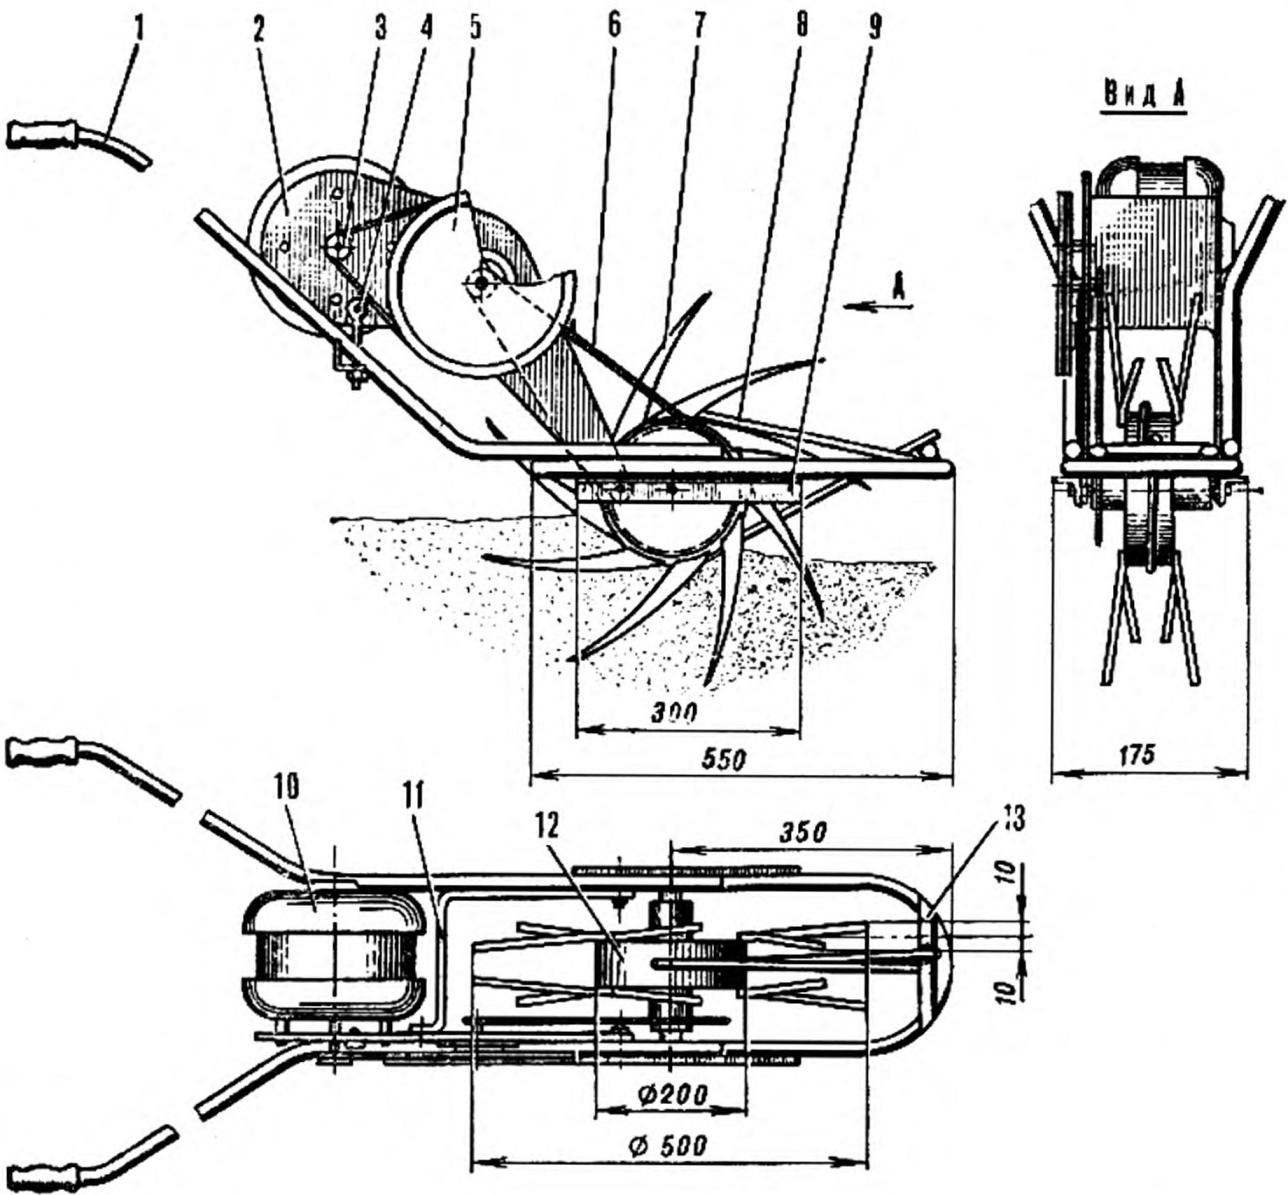 Fig. 1. Electrochlorinator